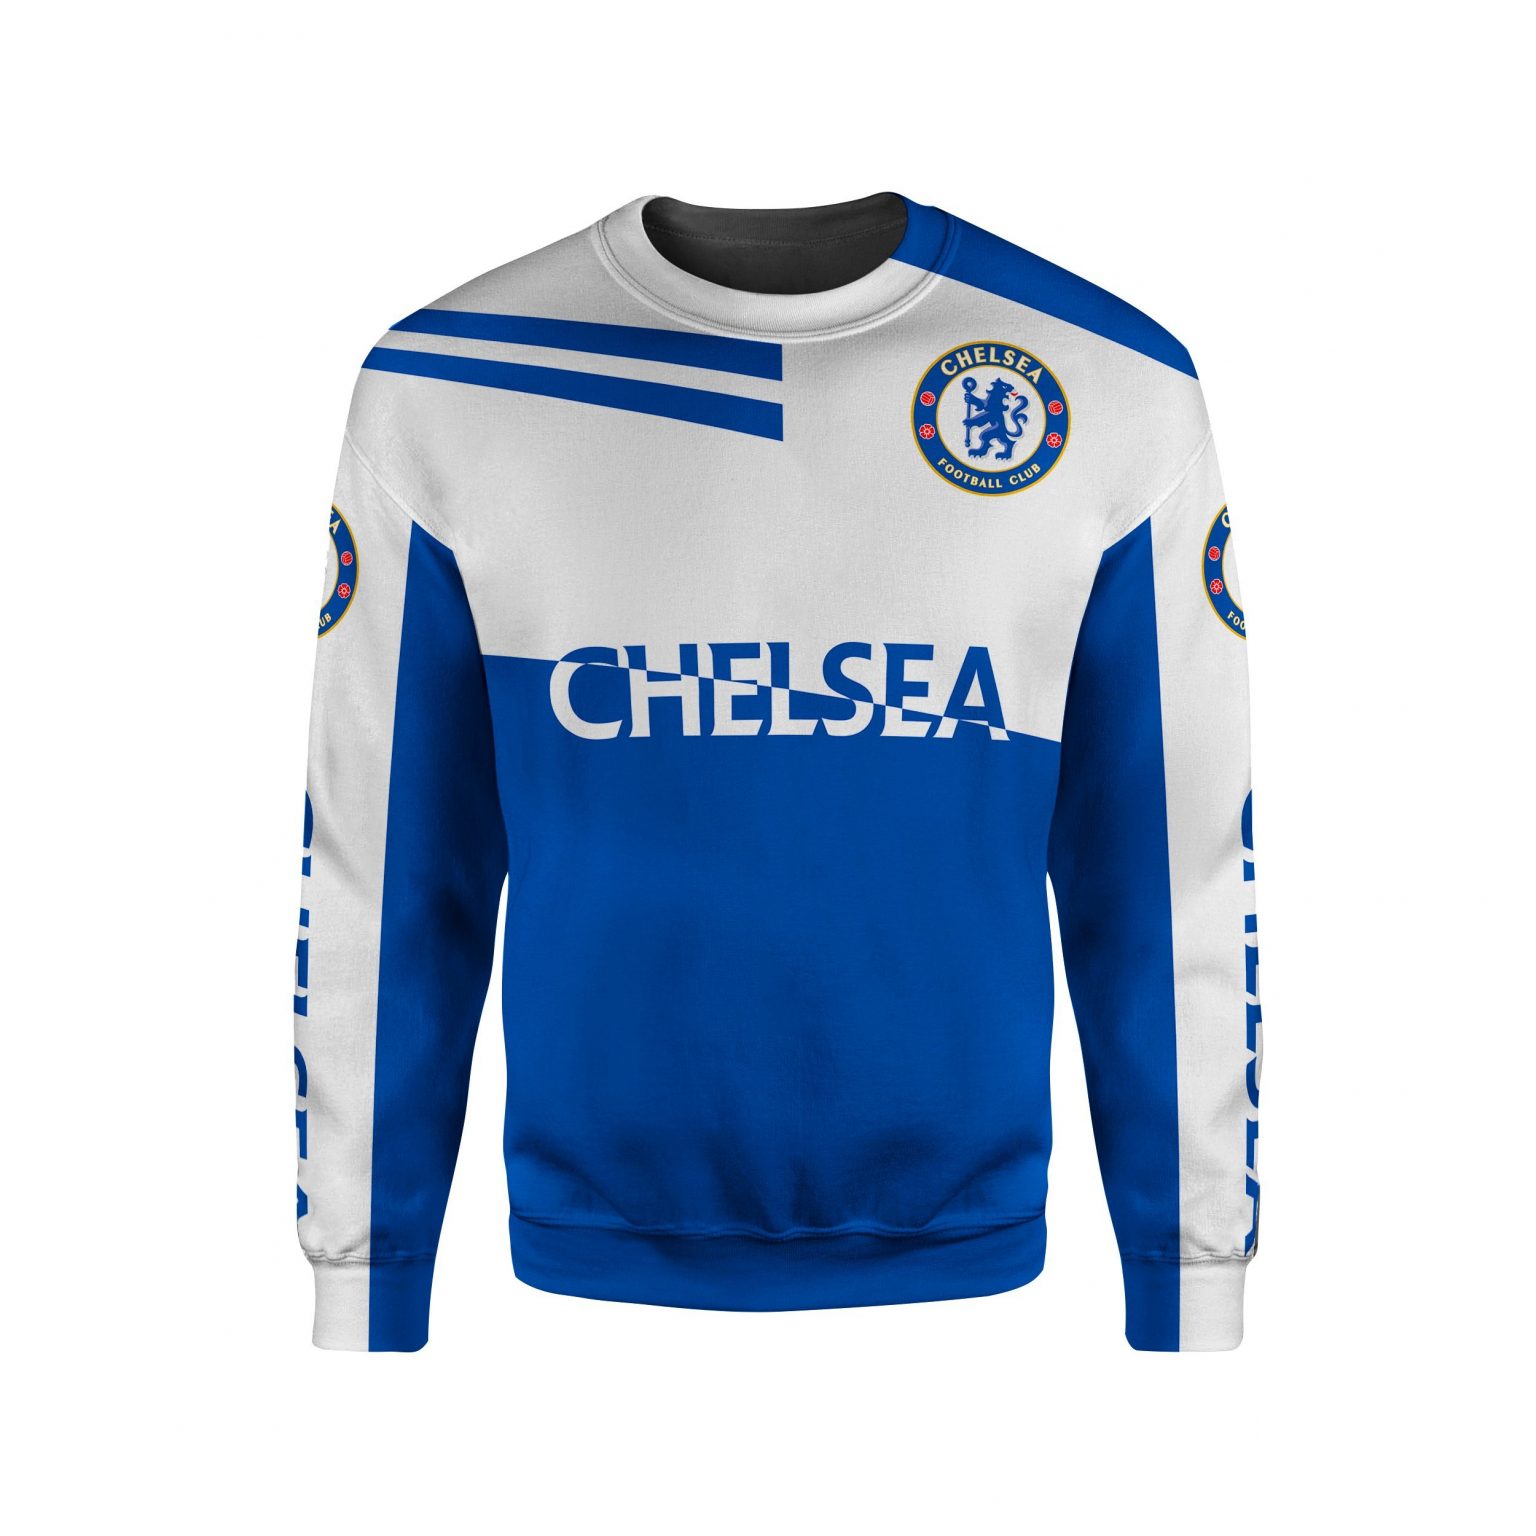 Chelsea Shirt Hoodie Uniform Clothes Soccer Sweatshirt Zip Hoodie ...